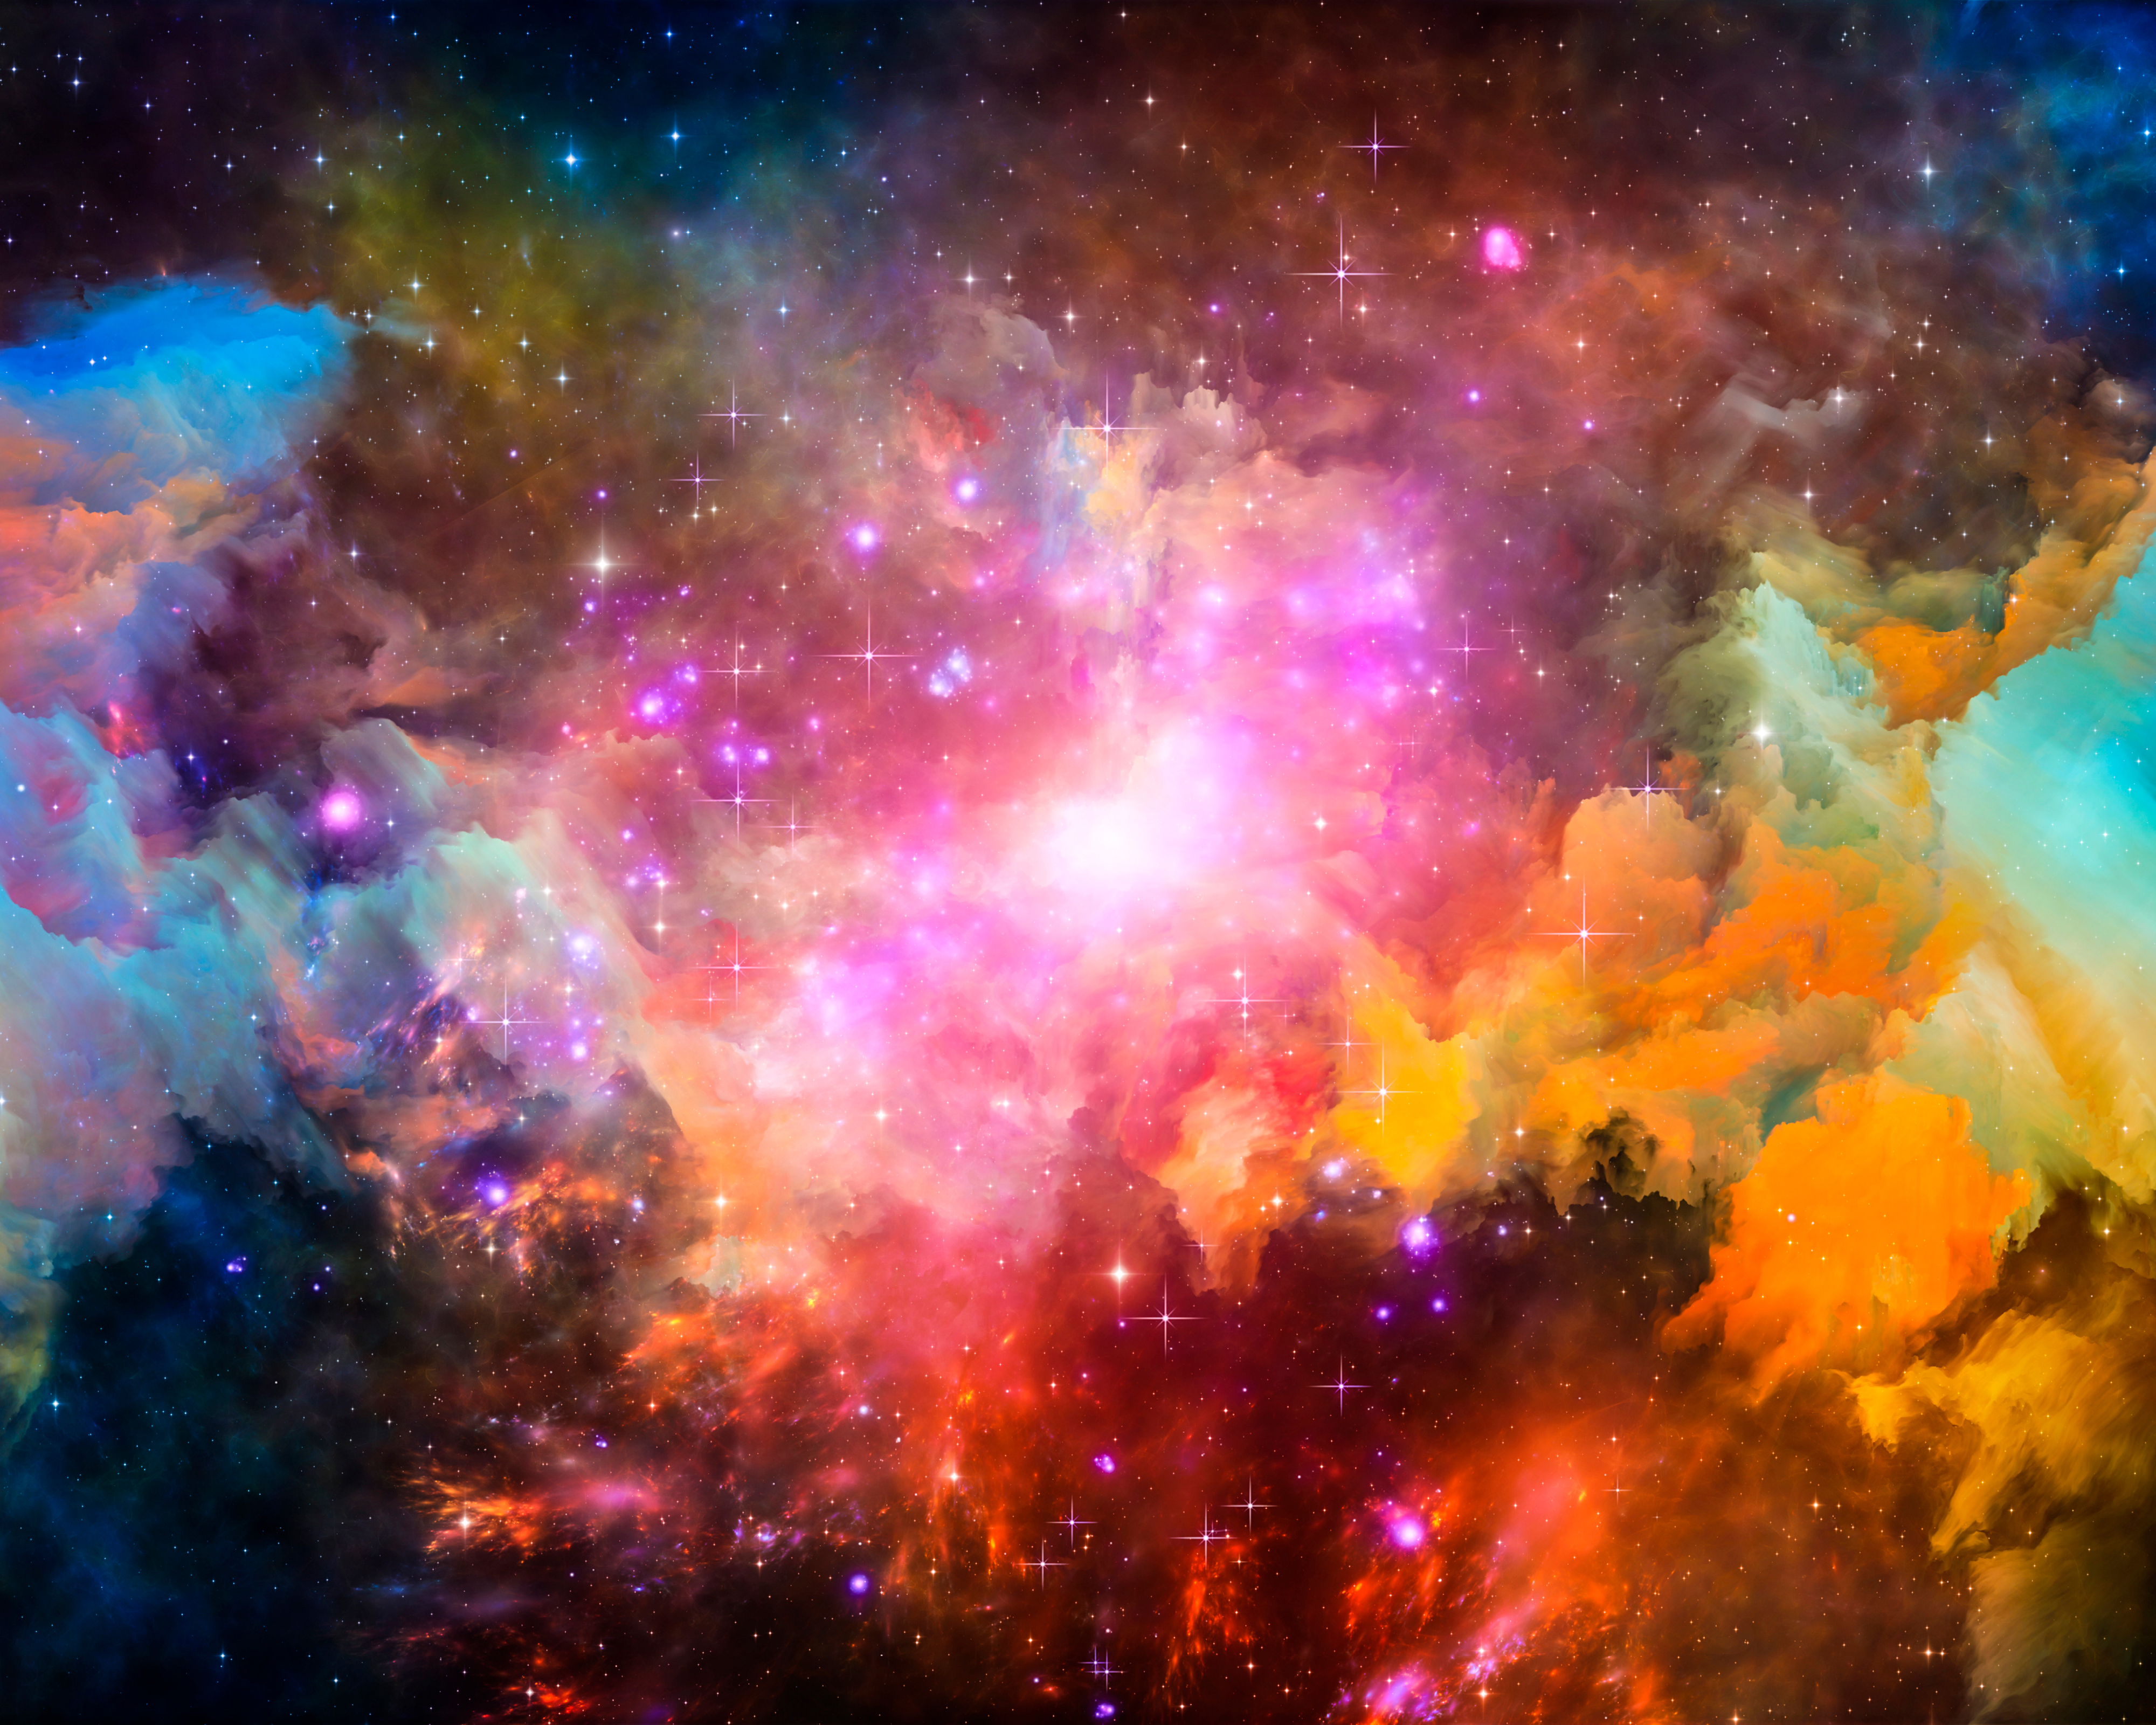 Image of Origin Murals Galaxy Stars Multi Wall Mural - 3.5 x 2.8m